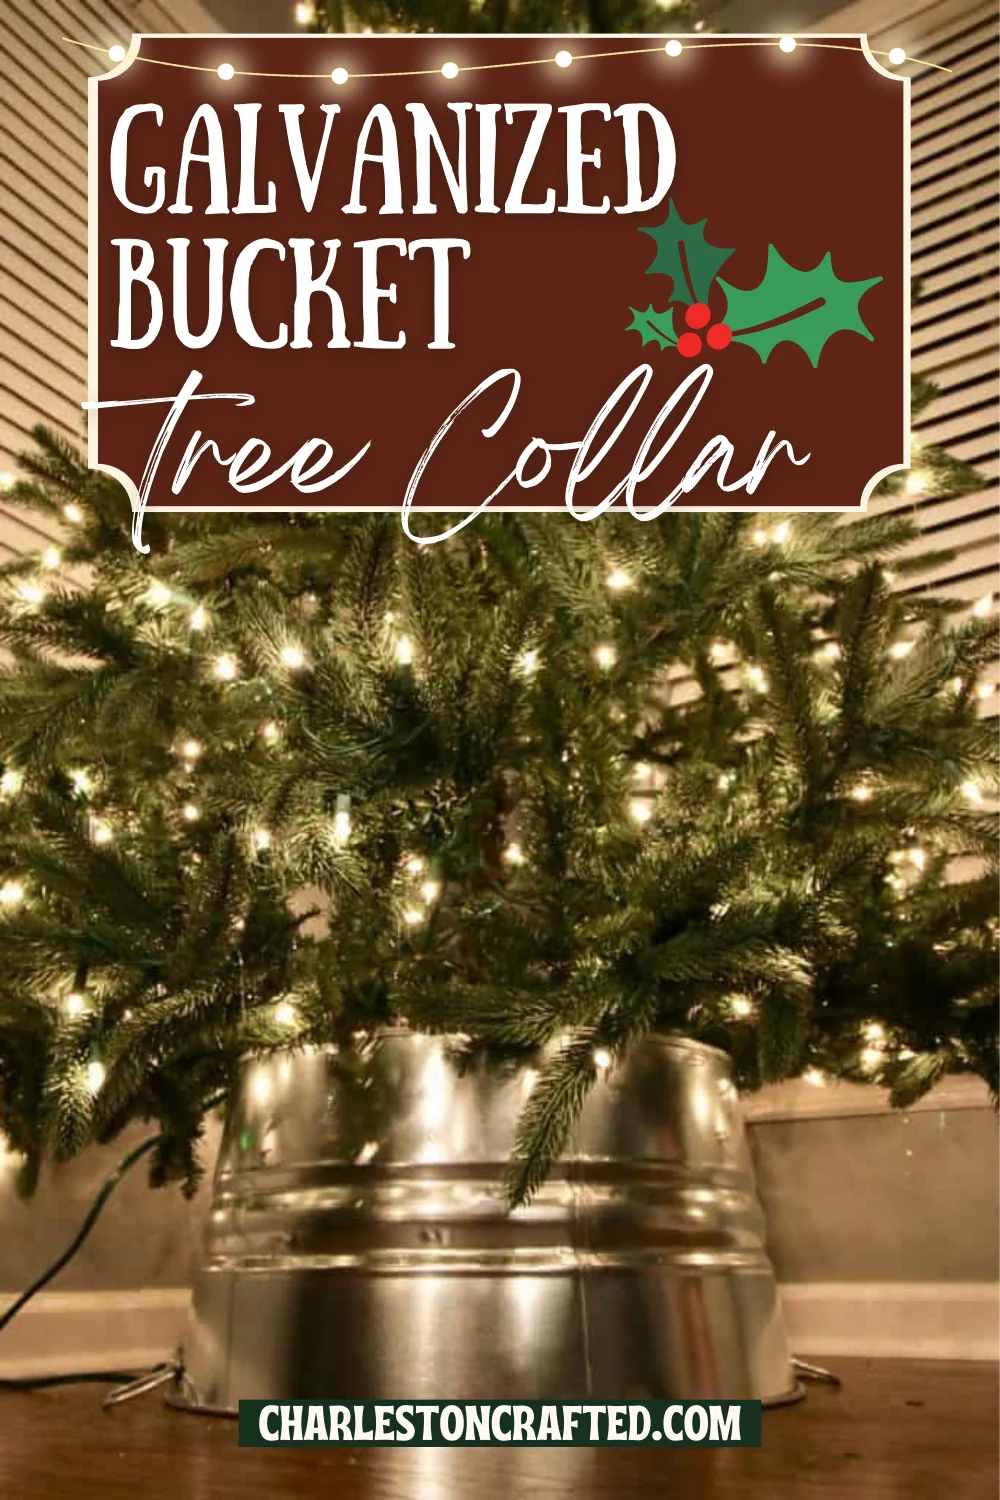 How to make a galvanized tub Christmas tree collar - Charleston Crafted